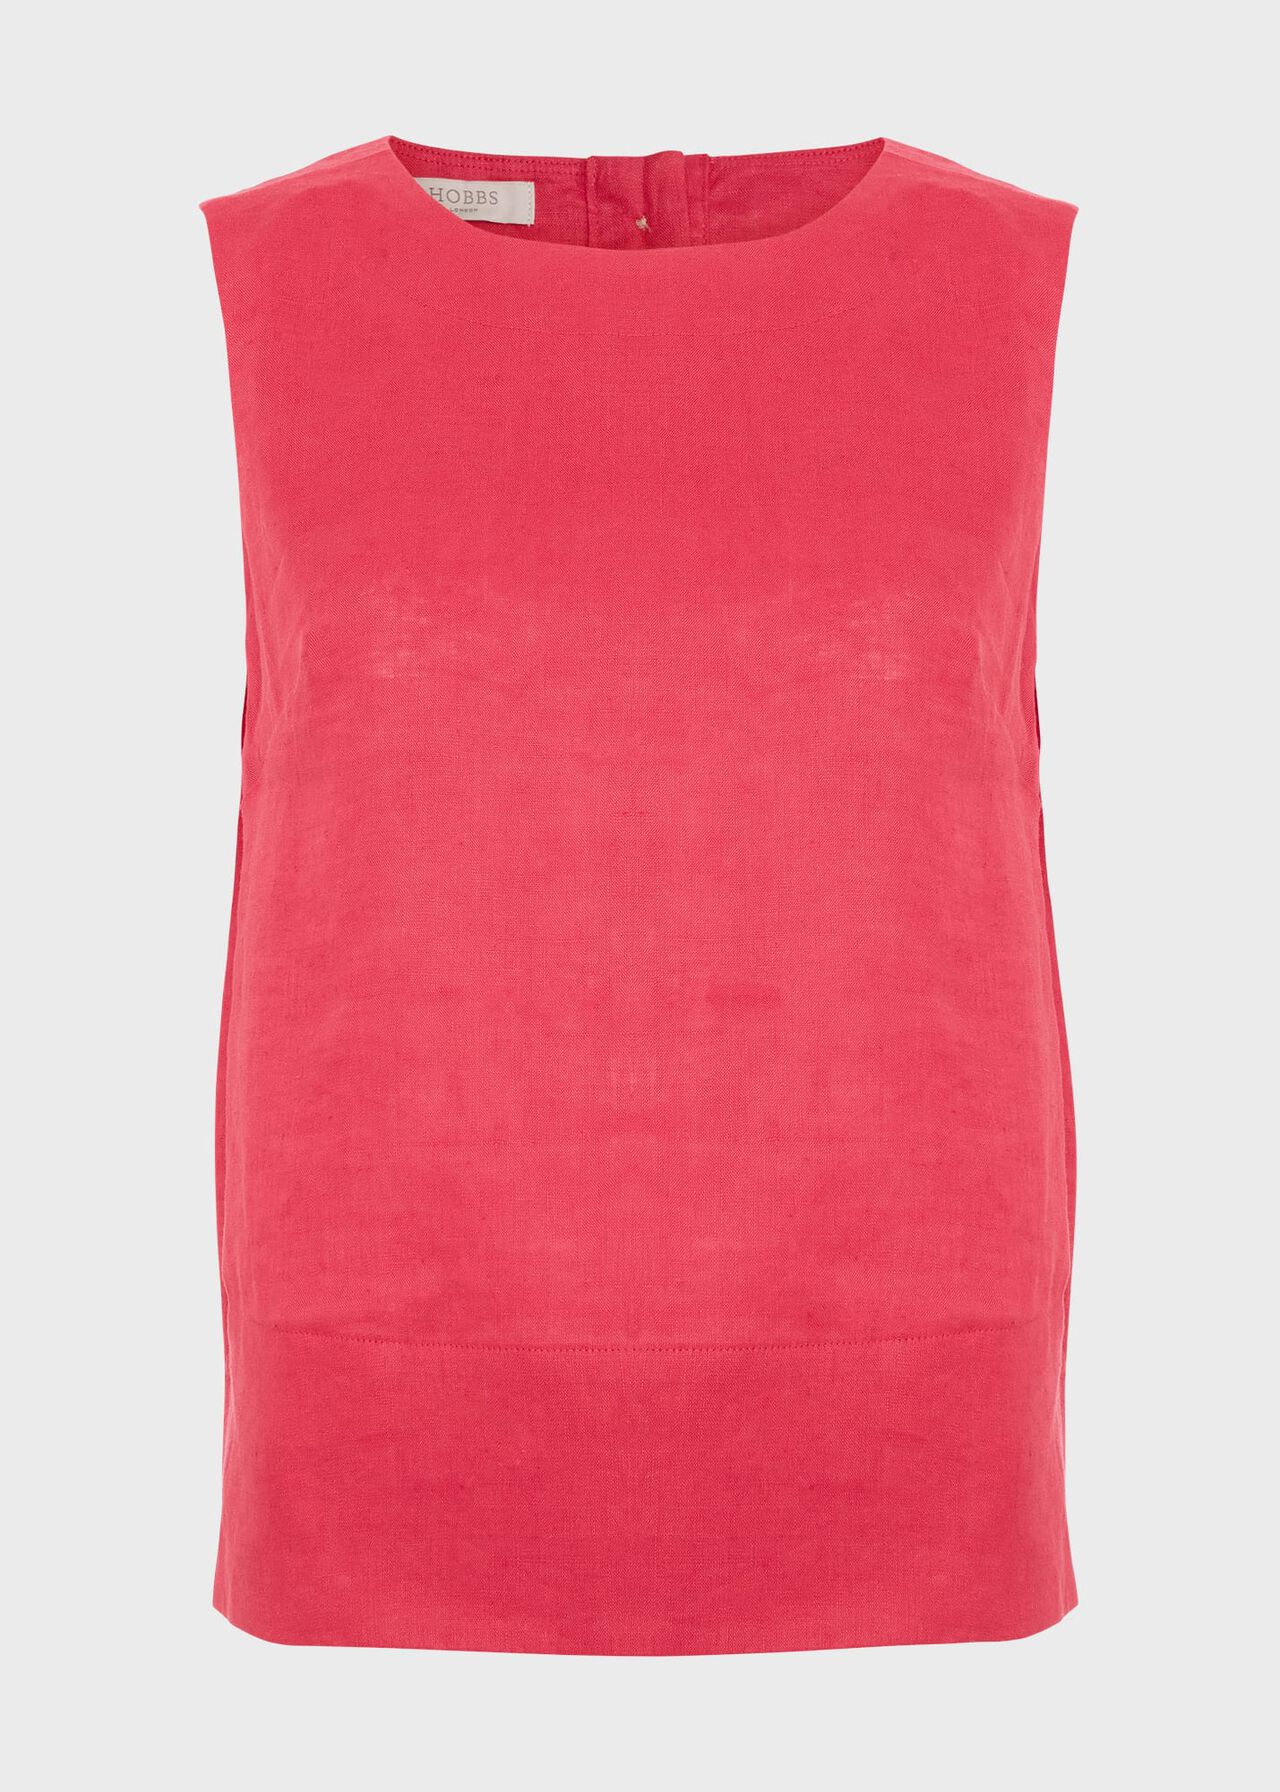 Malindi Linen Top, Rouge Pink, hi-res